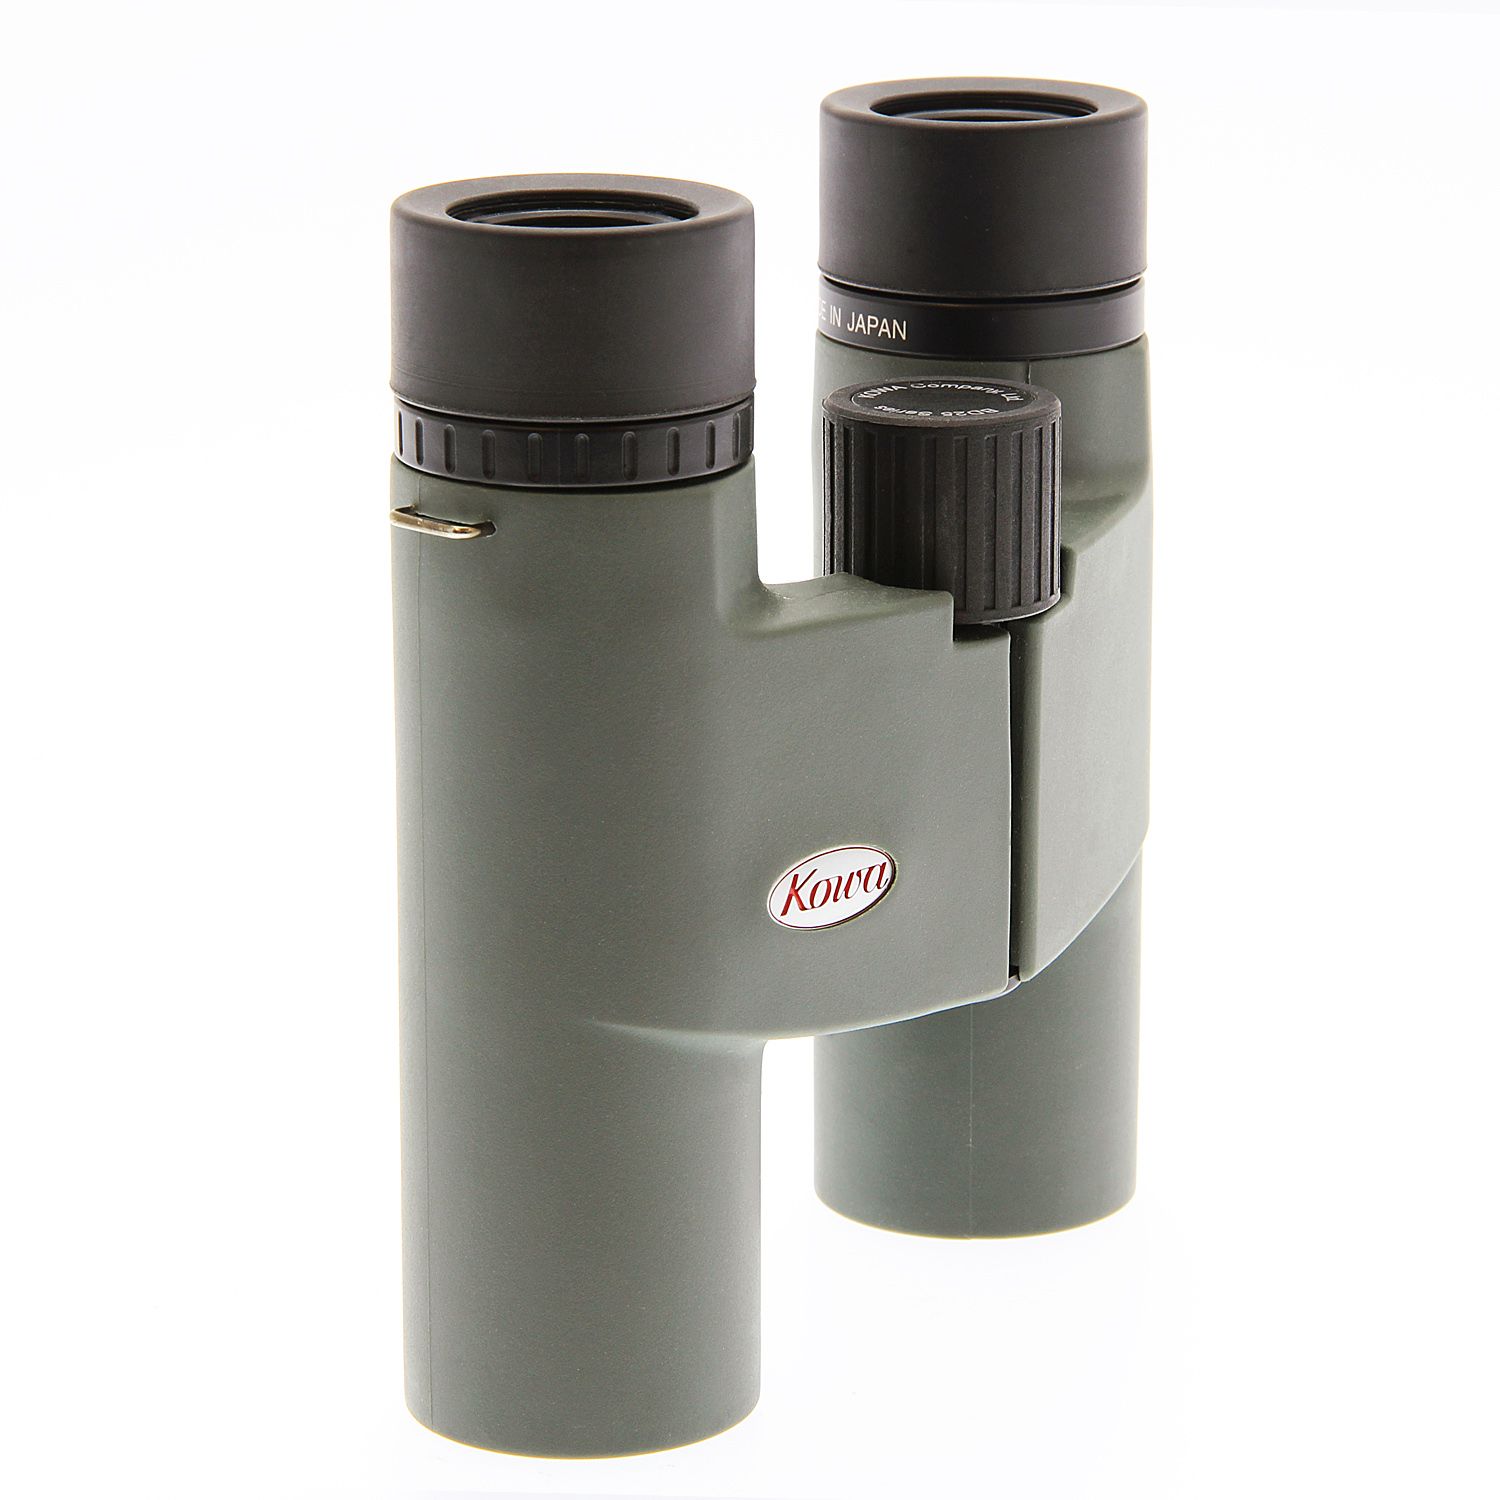 Kowa BD25 10x25 DCF Binocular